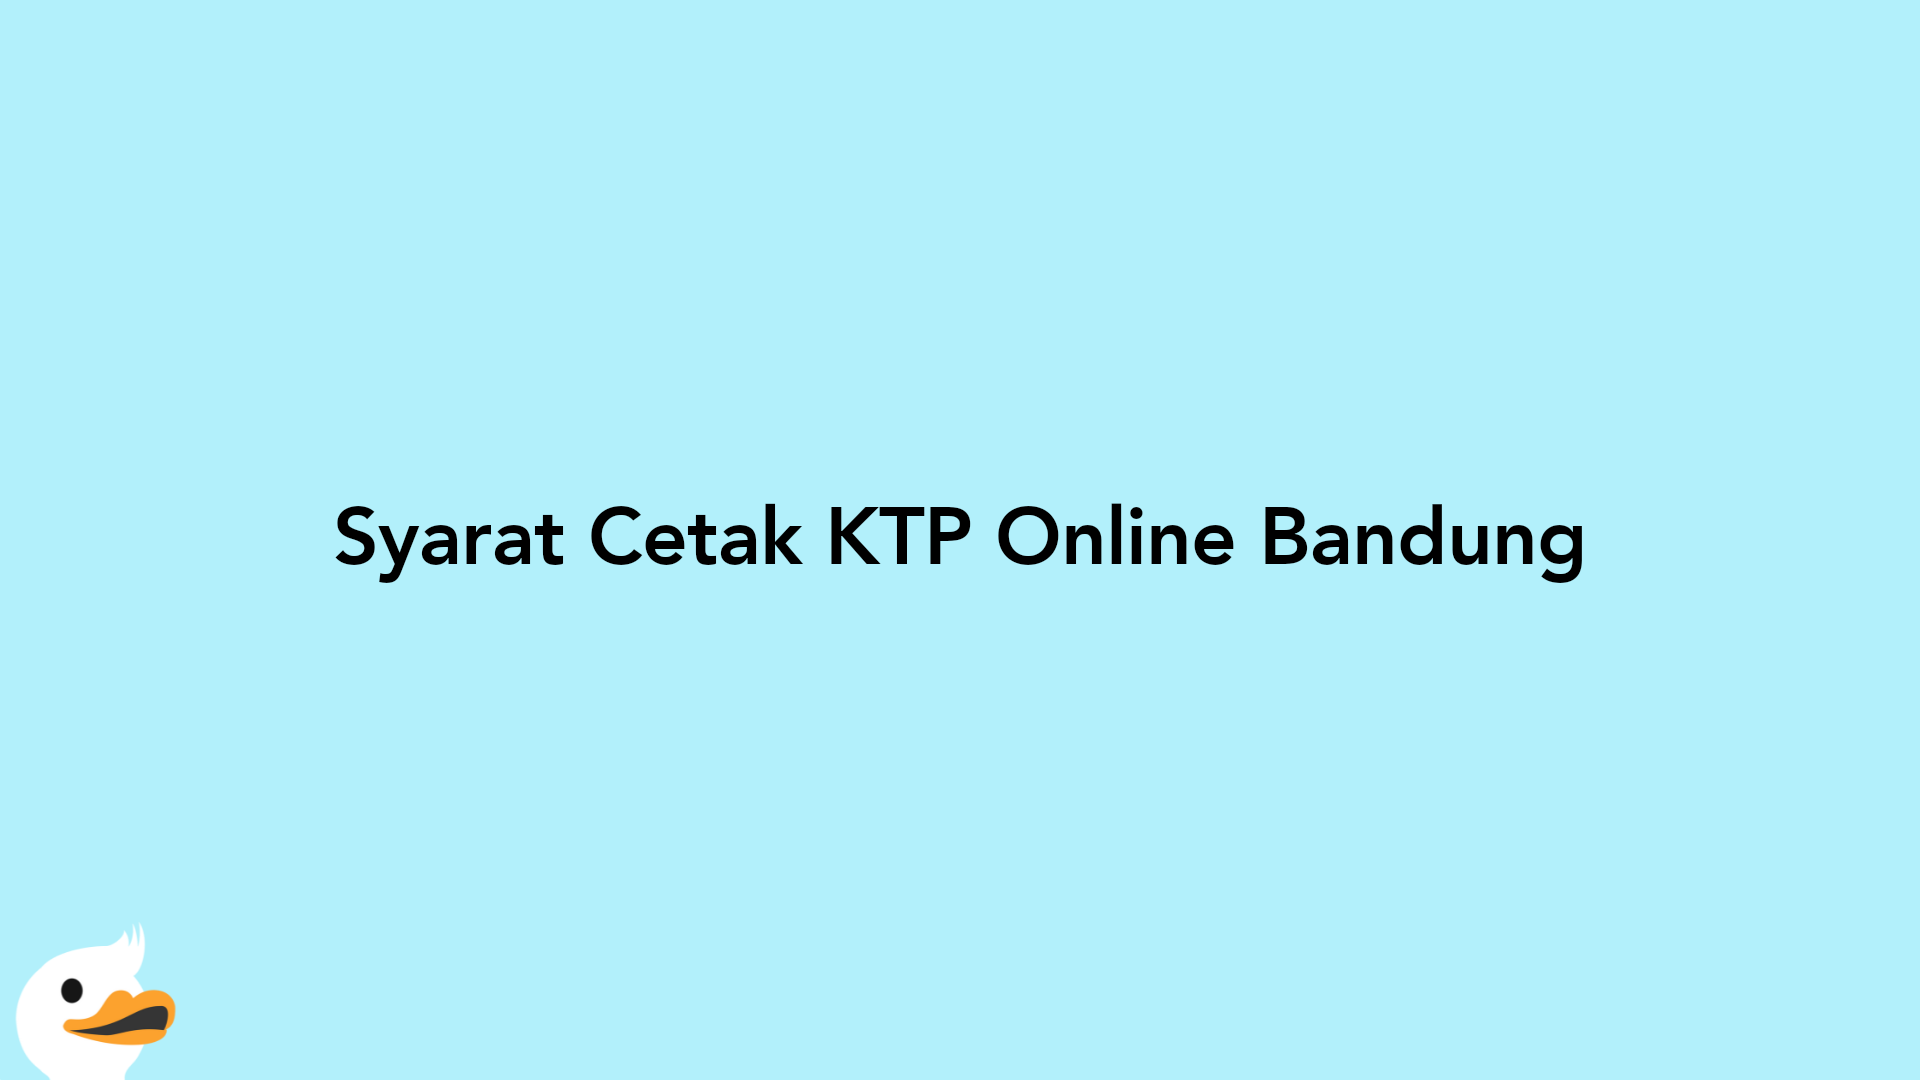 Syarat Cetak KTP Online Bandung